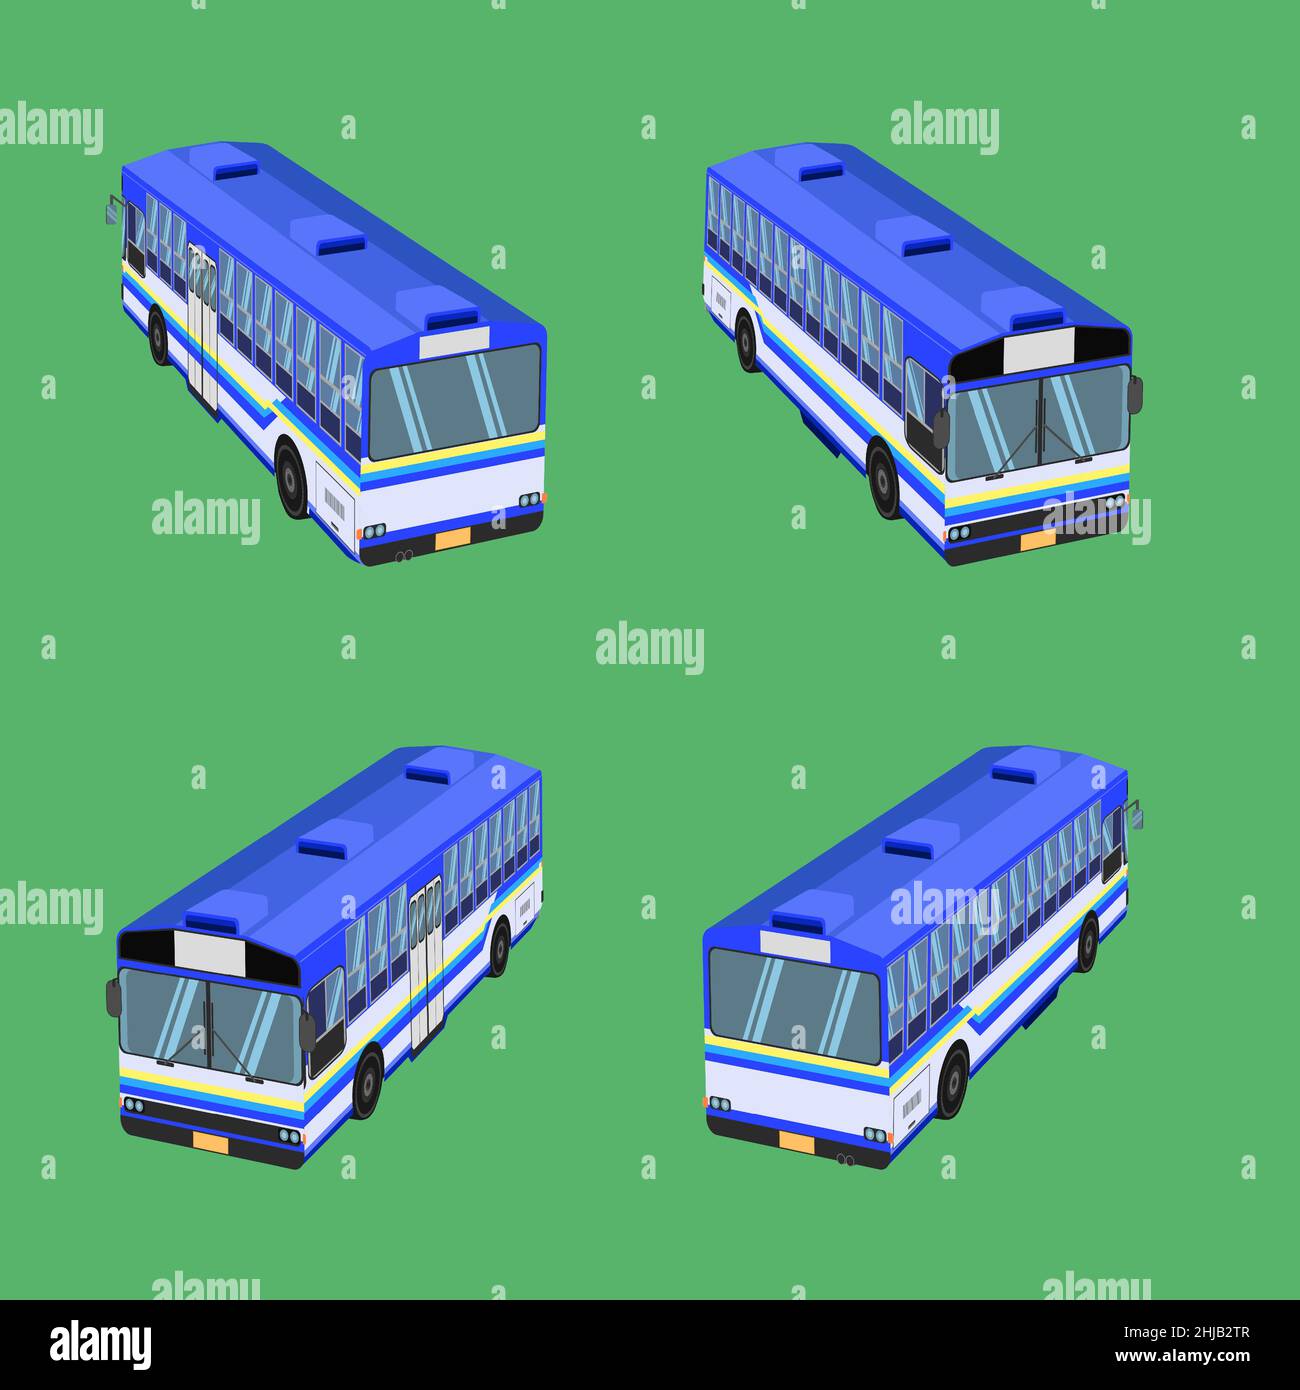 3D Draufsicht thai Bus blau weiß grün Transport Auto Fahrzeug Fahrer Tarif  Passagier Autobus Omnibus Bus Schiene Bank Stuhl Stuhl Sessel Sitz Matratze  Stock-Vektorgrafik - Alamy